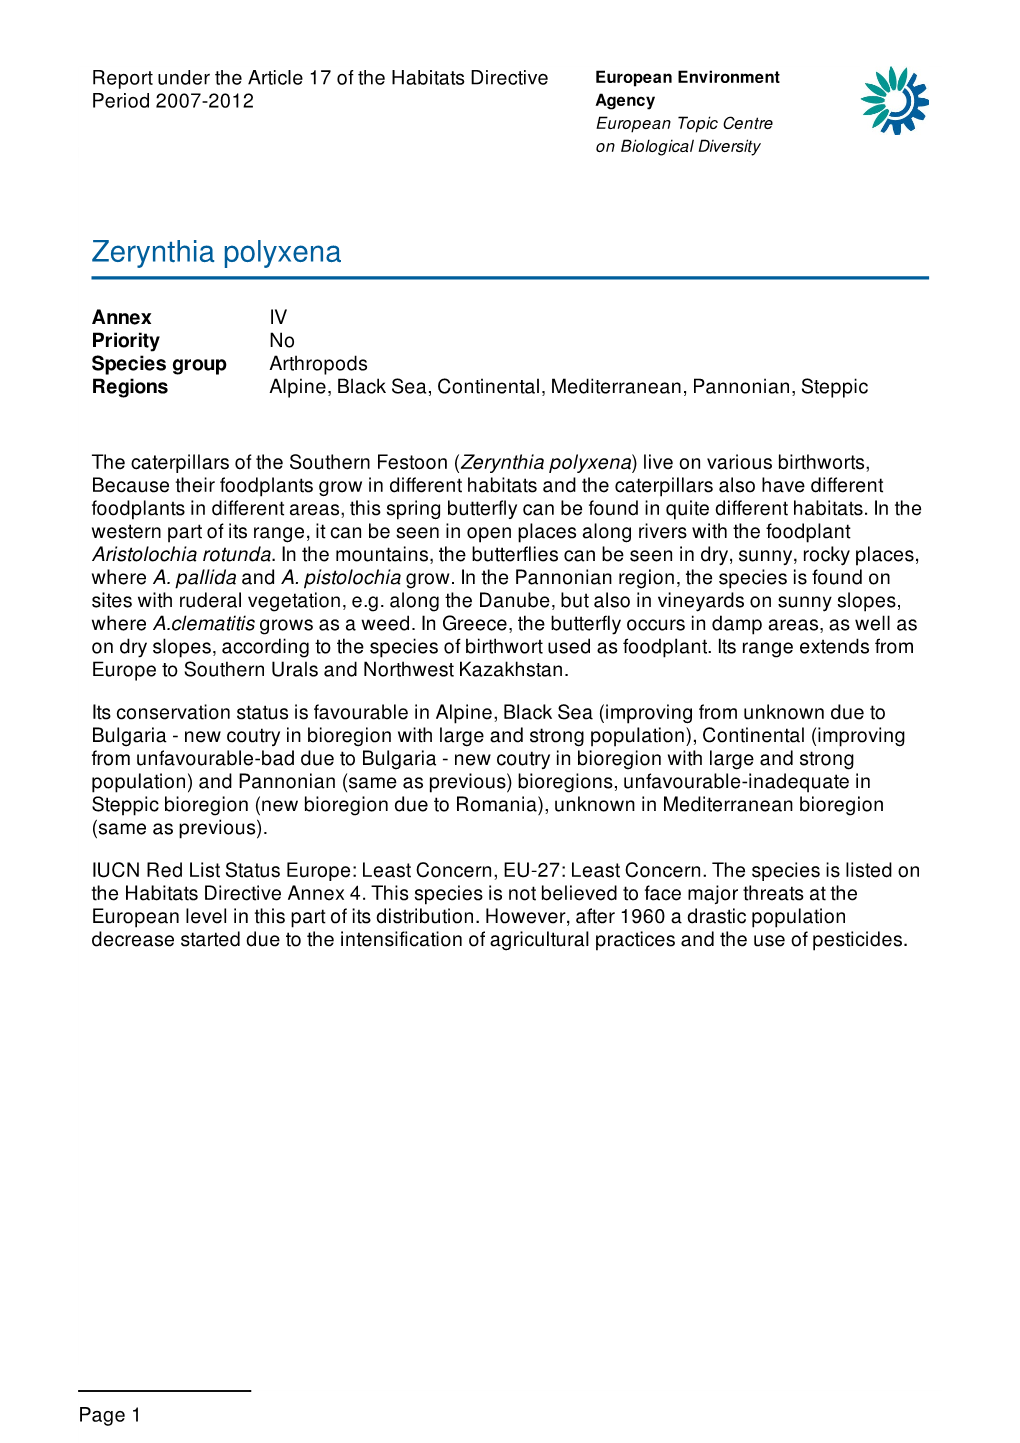 Zerynthia Polyxena